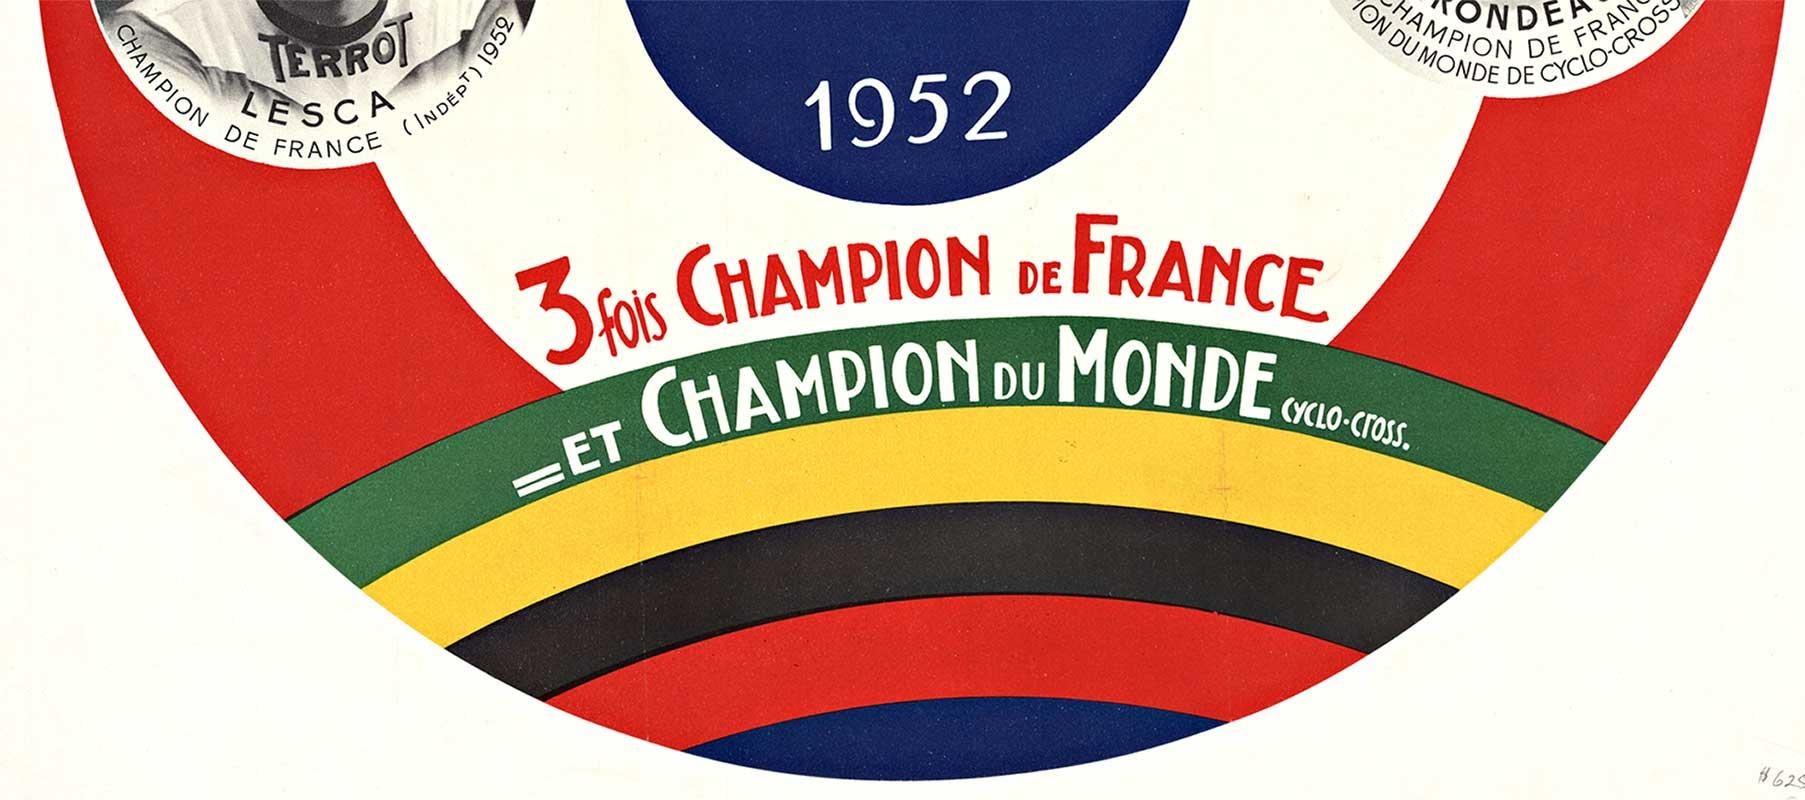 Original vintage poster: Terrot 1952 3 fois Champion du France Cyclo-Cross bicycling poster.

 Linen-backed round vintage bicycle racing poster Terrot 1952; (Terrot-Hutchinson)  3 fois Champion de France et Champion du Monde.    The image features: 